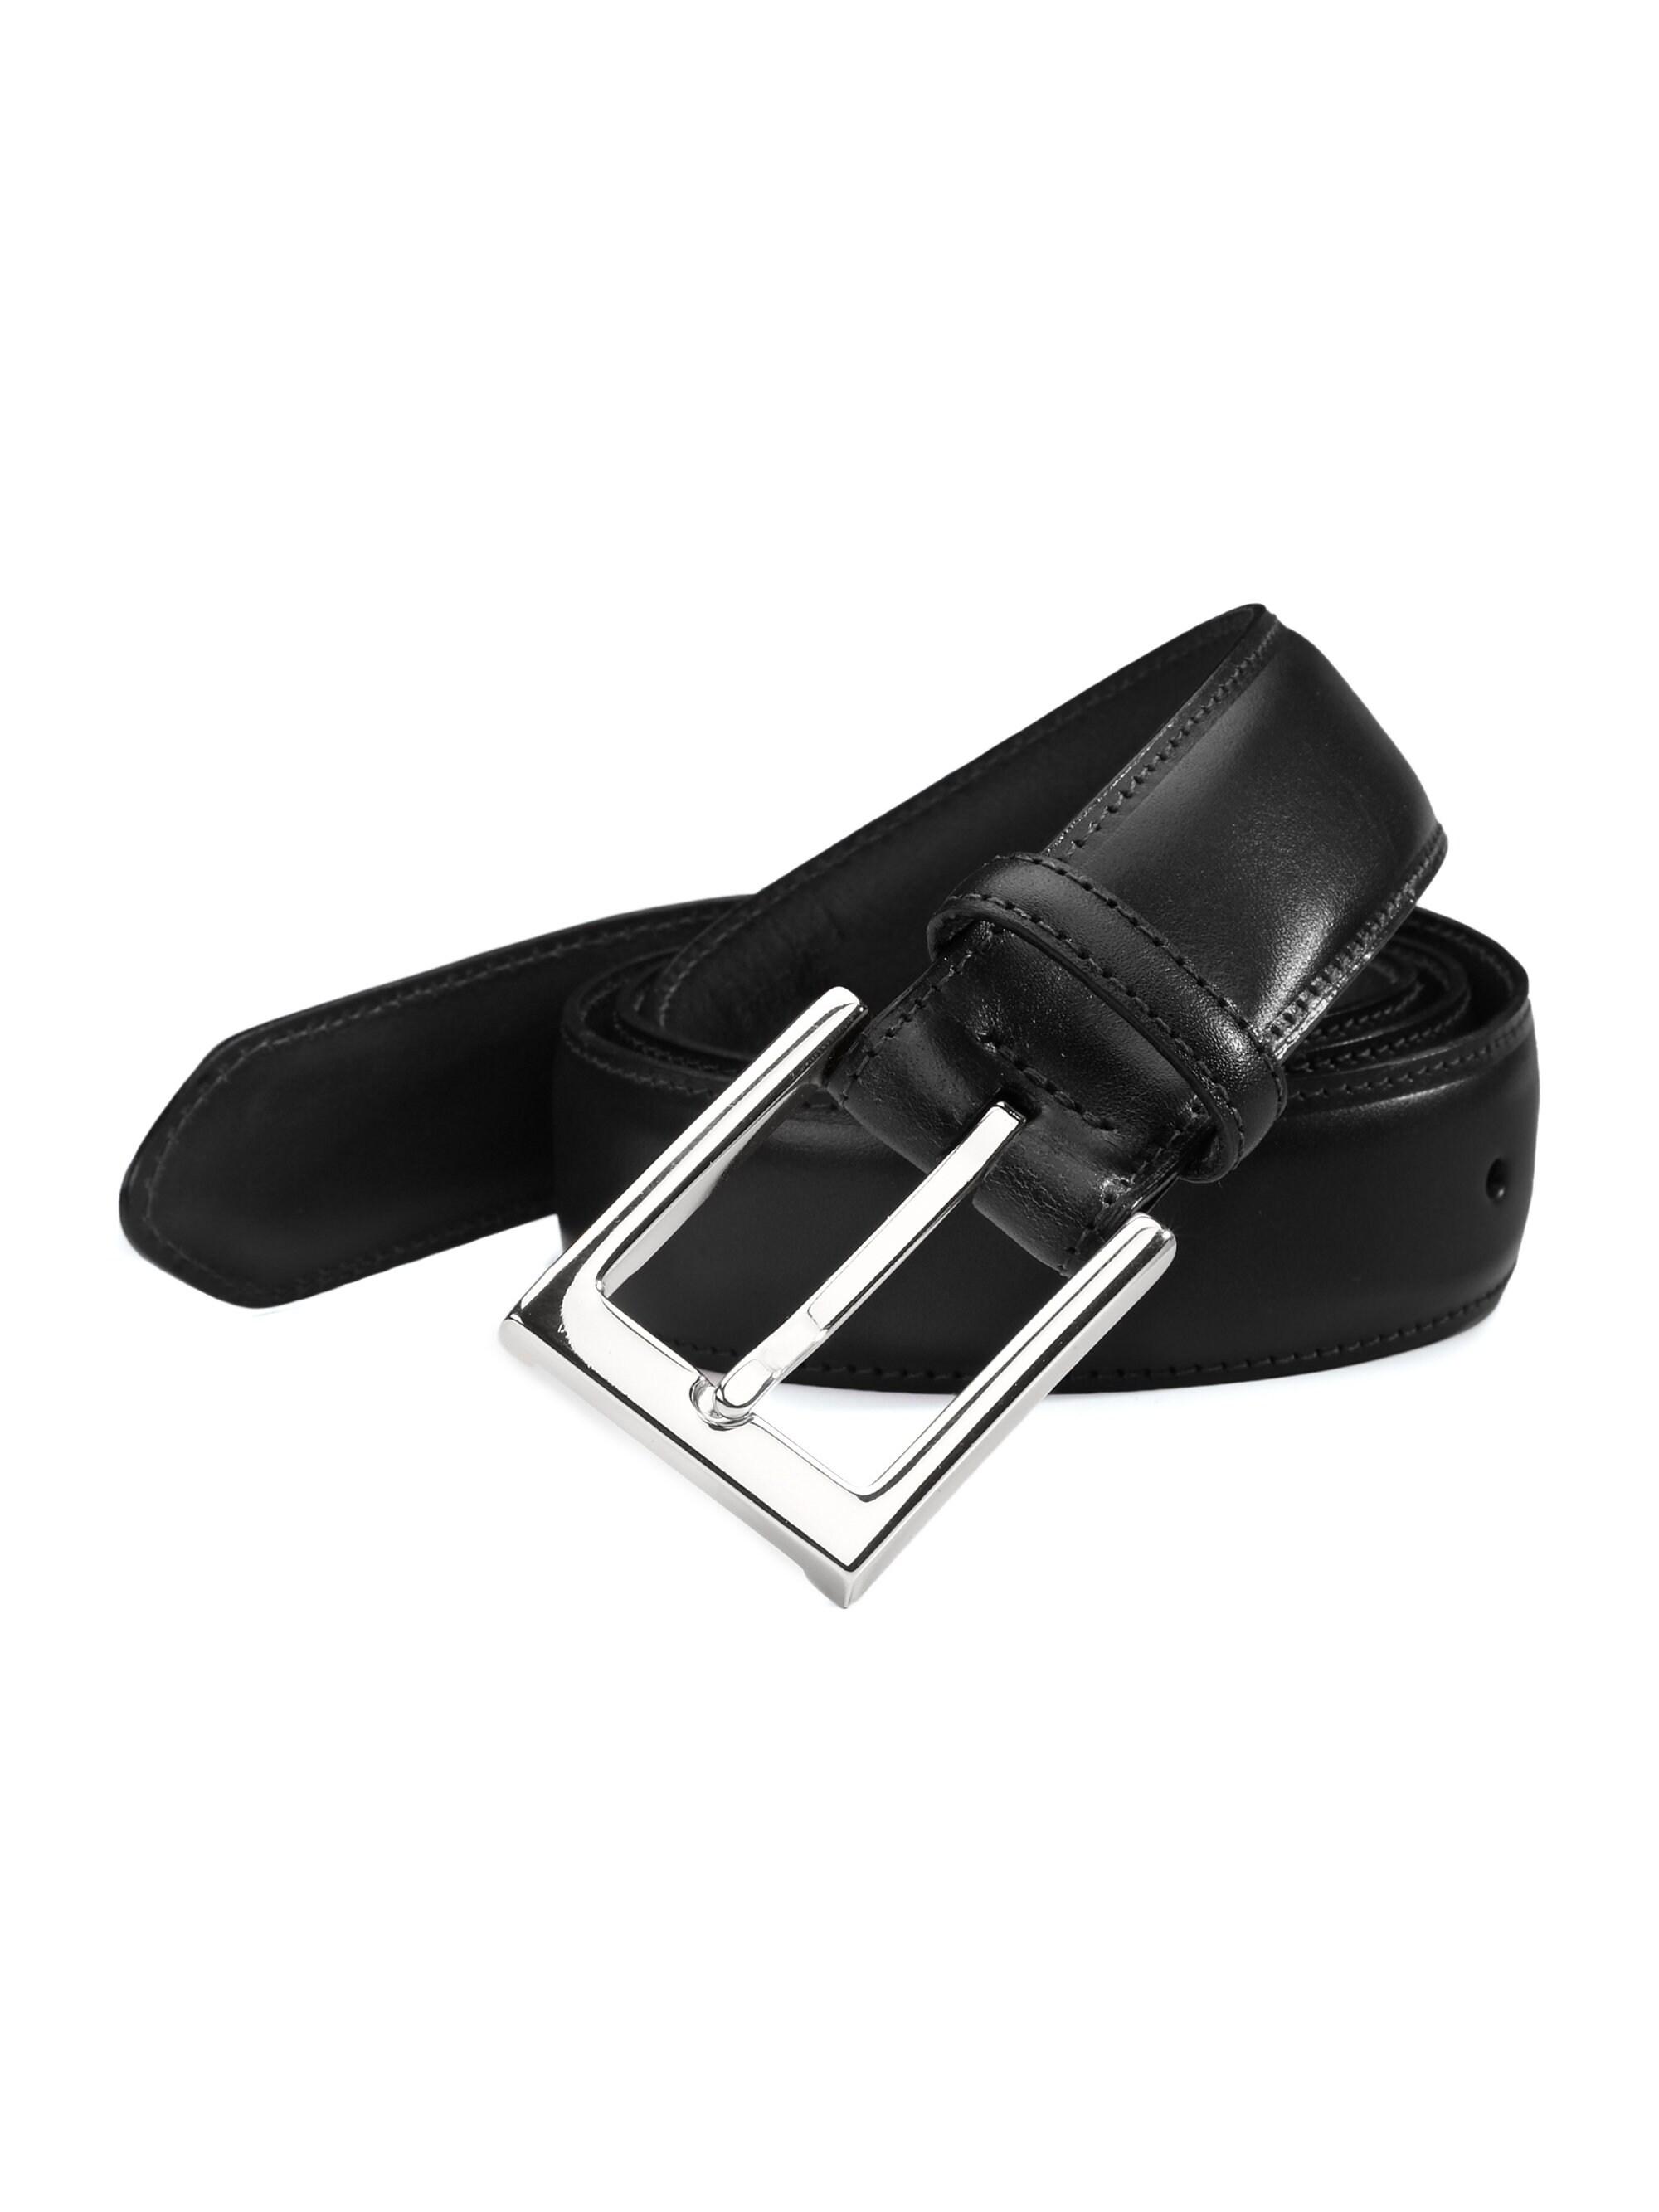 Saks Fifth Avenue Leather Belt in Black for Men - Lyst